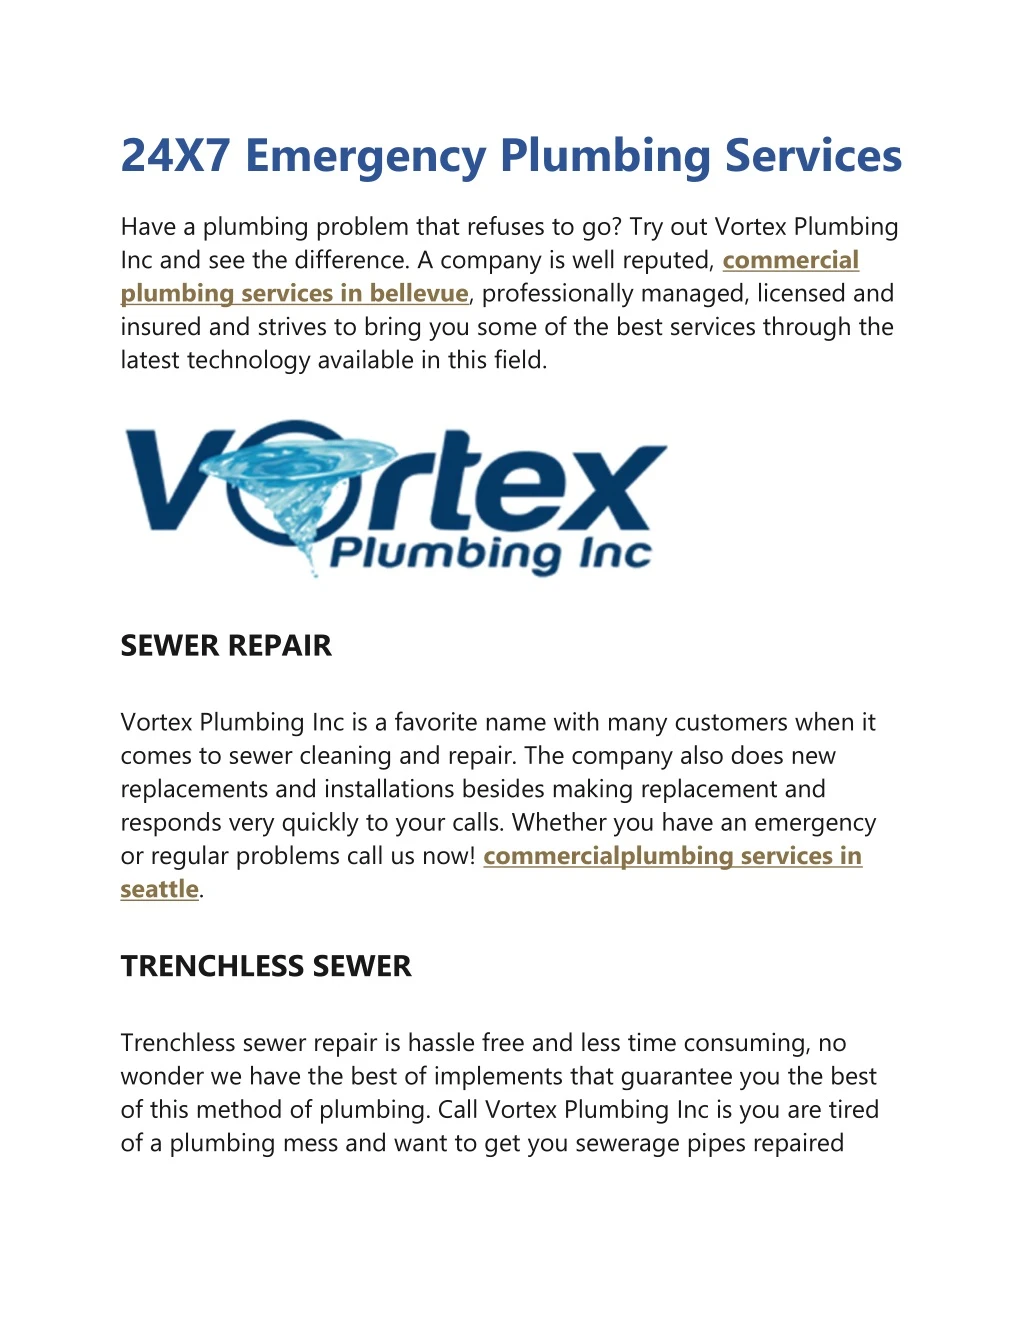 24x7 emergency plumbing services